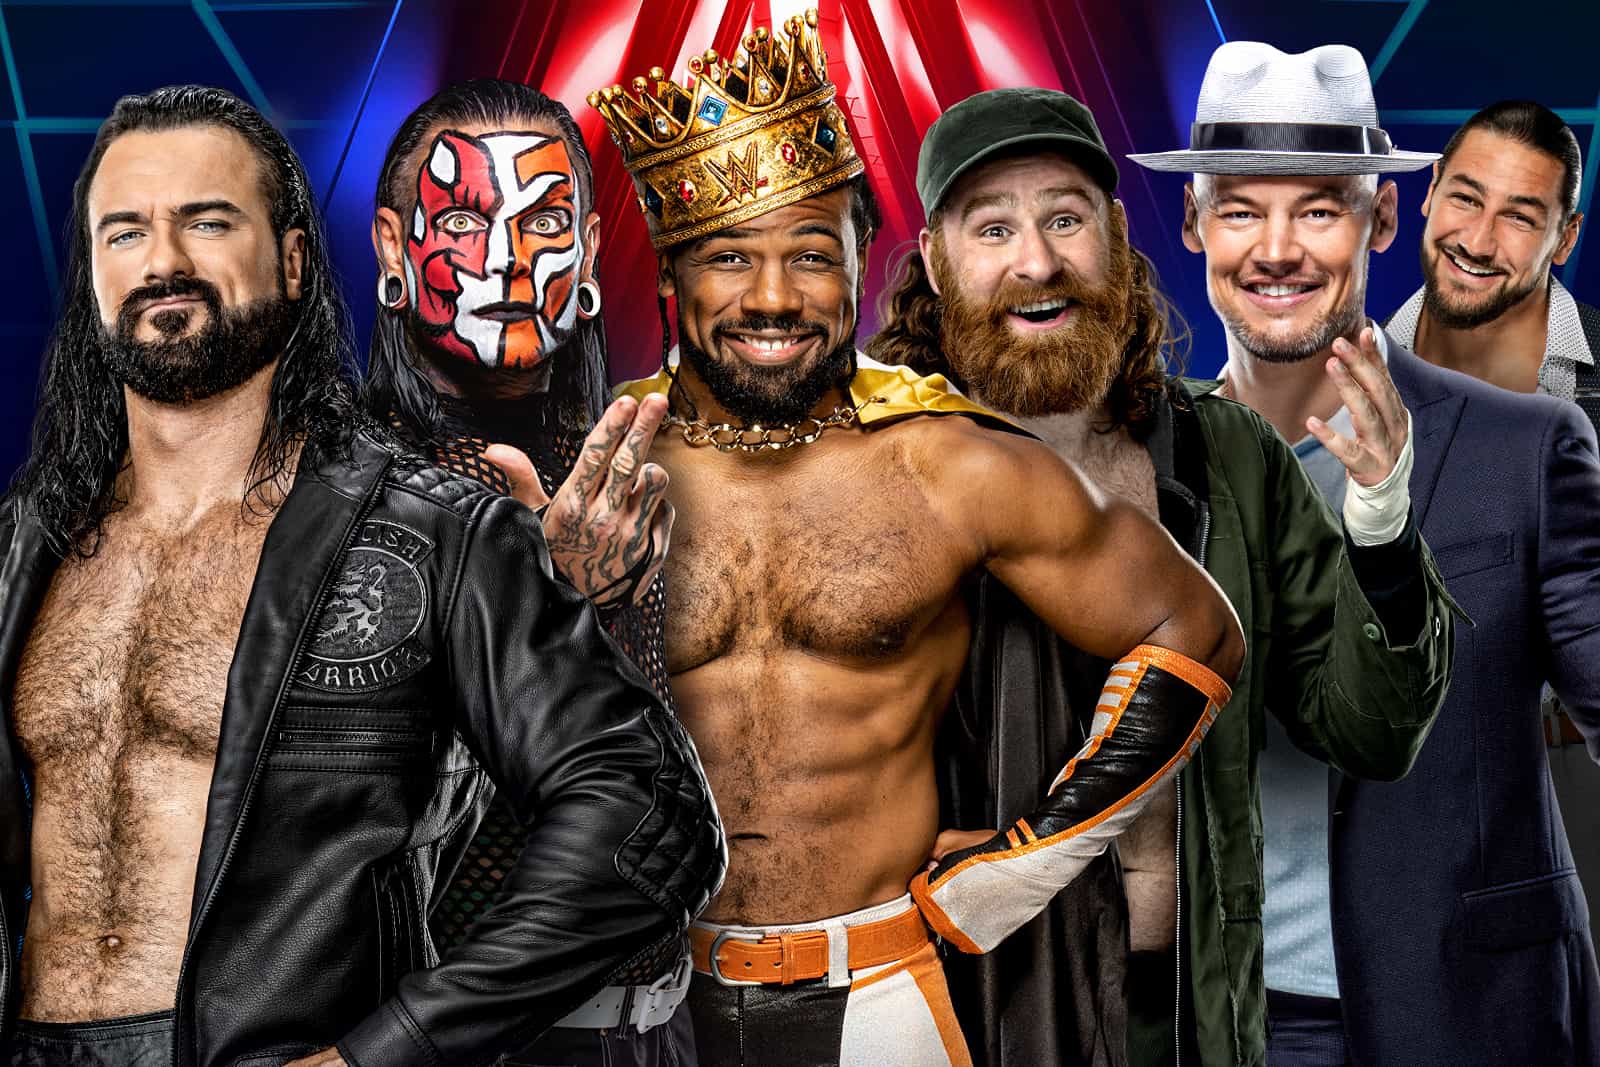 Drew McIntyre, Jeff Hardy, Xavier Woods, Sami Zayn and Happy Corbin with Madcap Moss make up the men's SmackDown Survivor Series team